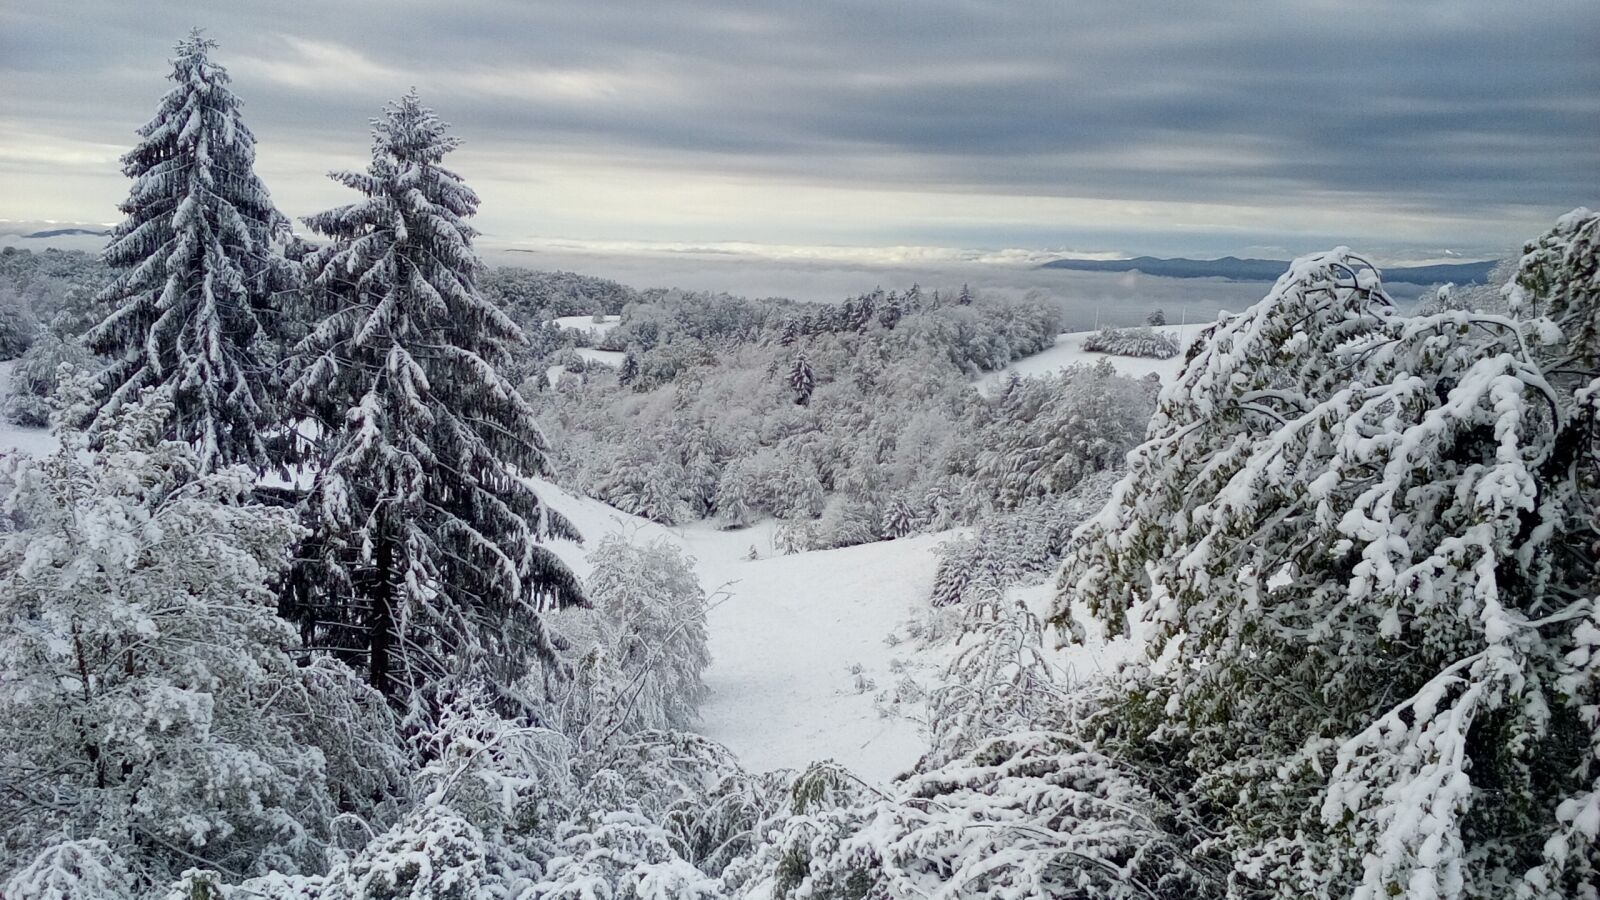 LG LEON sample photo. Winter, snow, nature photography